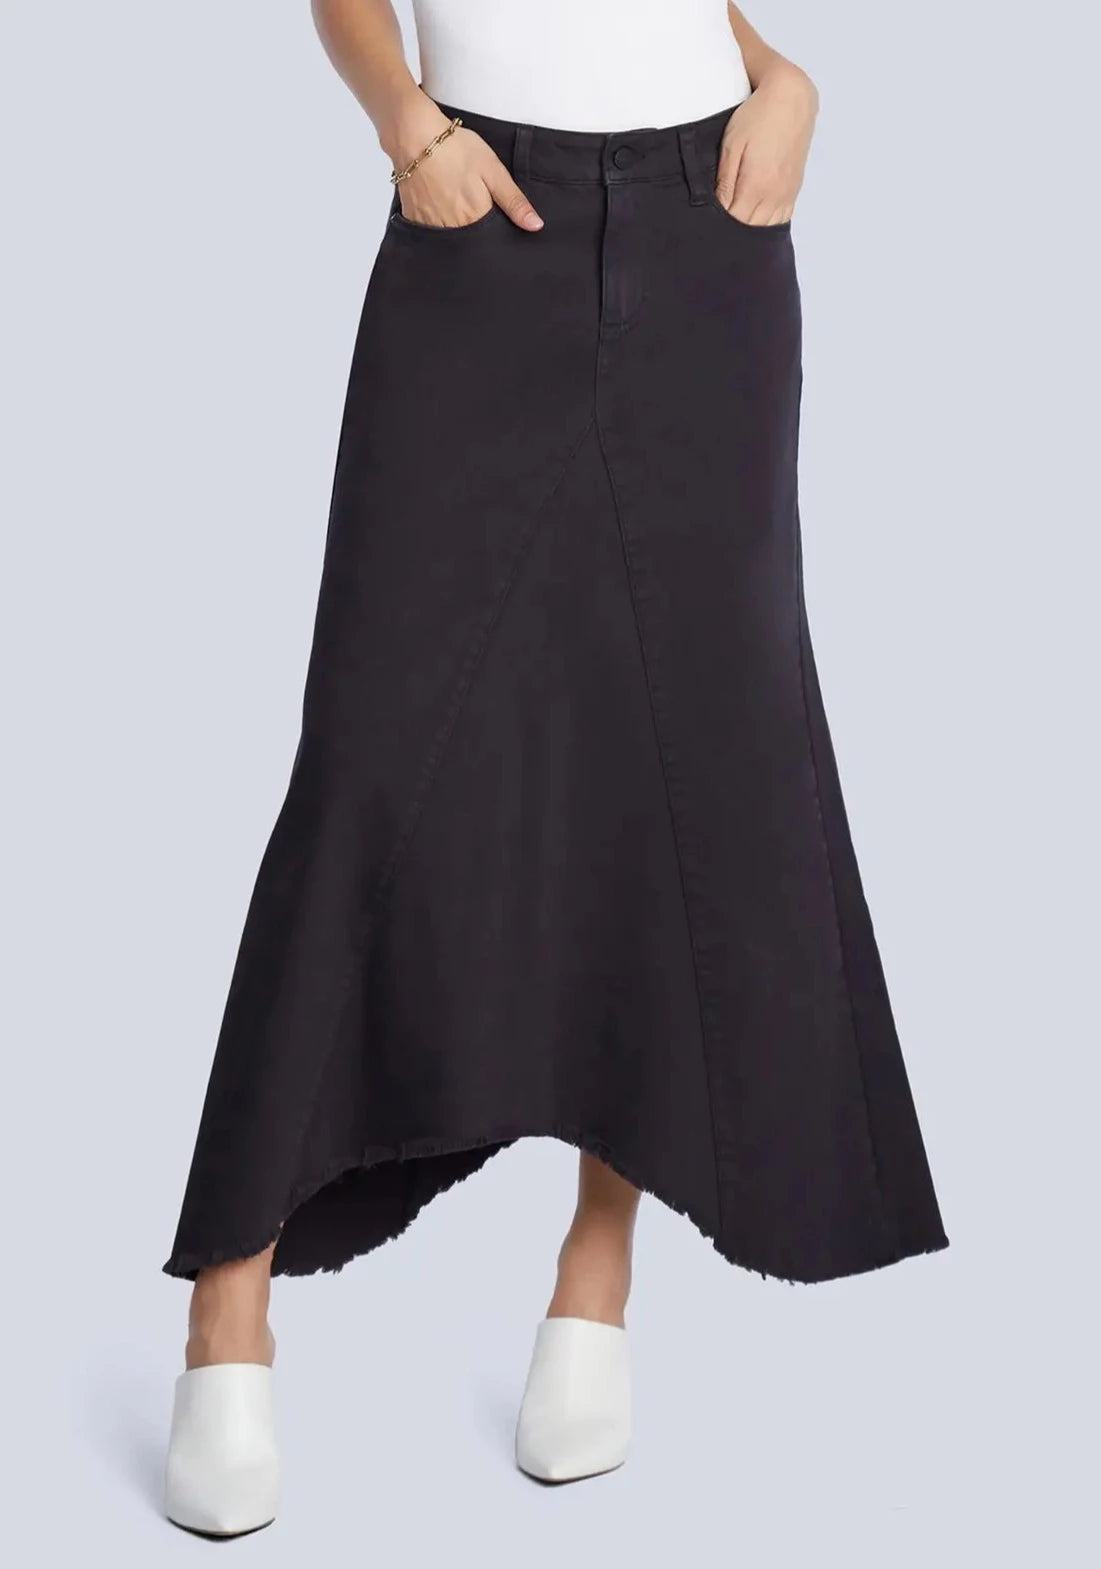 PULL&BEAR LONG - Maxi skirt - black - Zalando.de